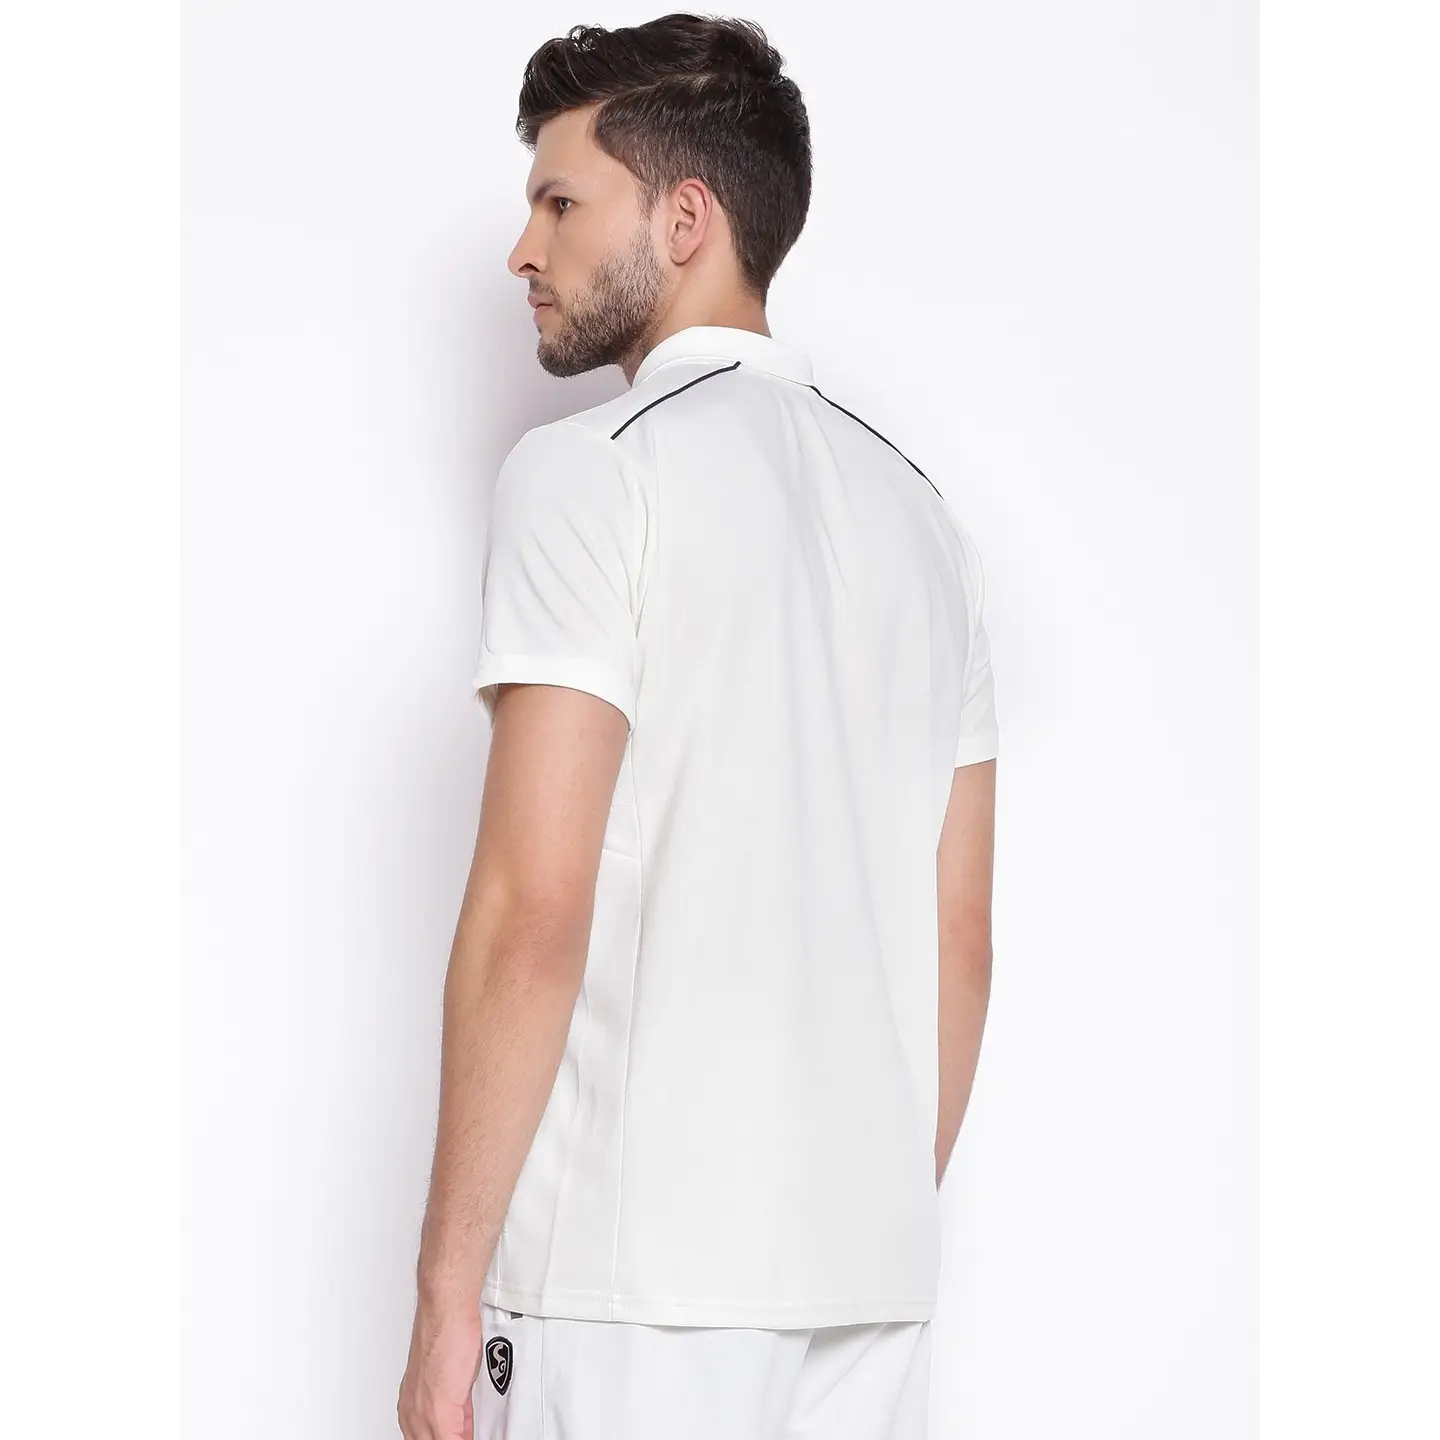 SG Century White Cricket Shirt Half Sleeve Premium Quality - CLOTHING - SHIRT